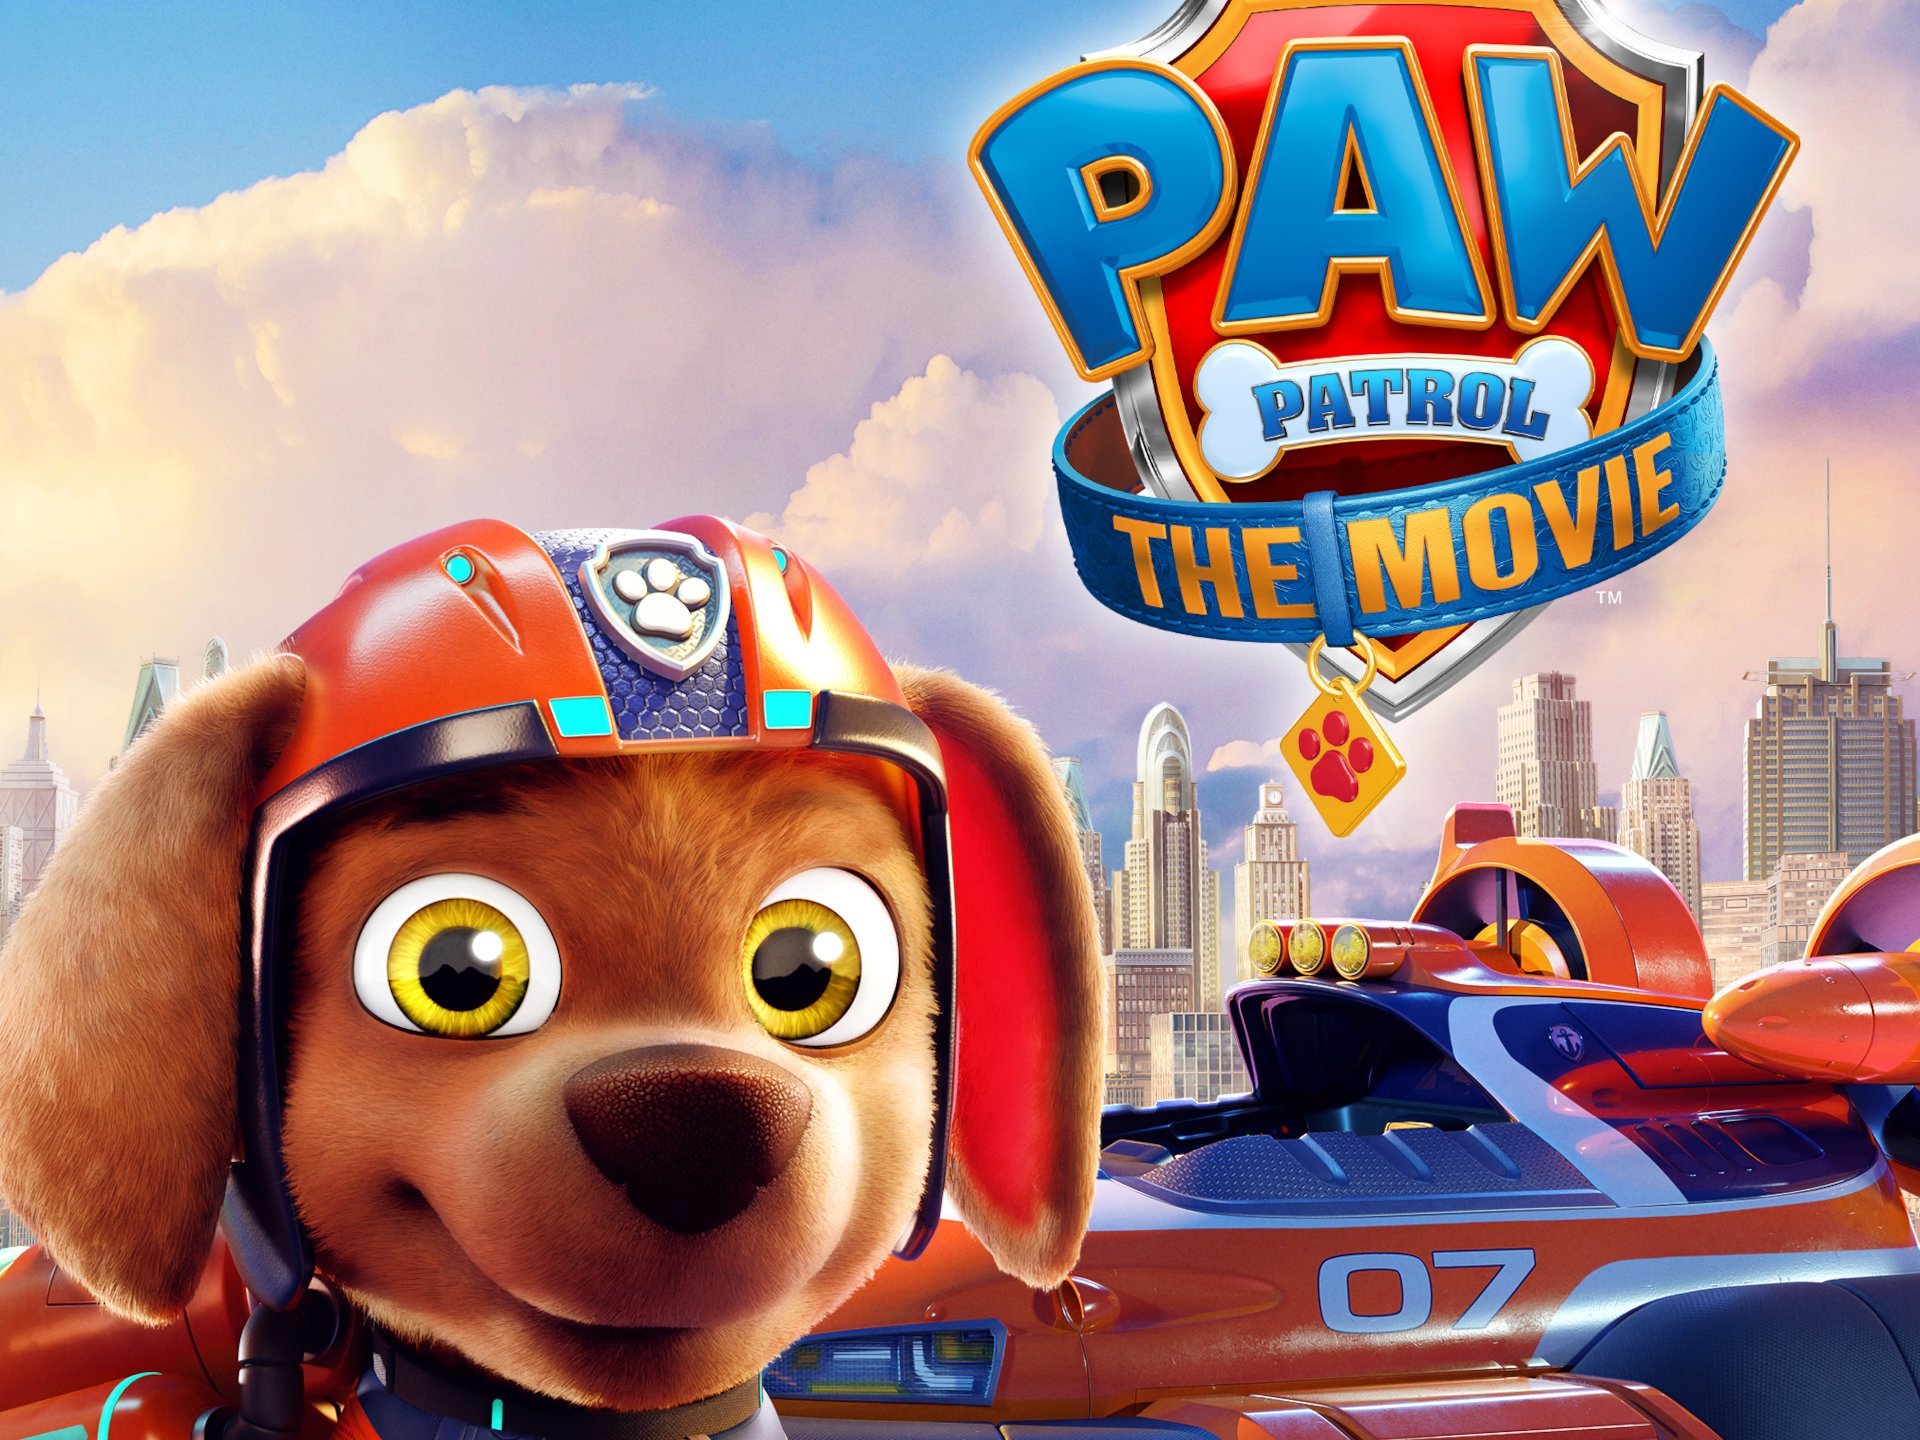 Paw patrol movie gulucars